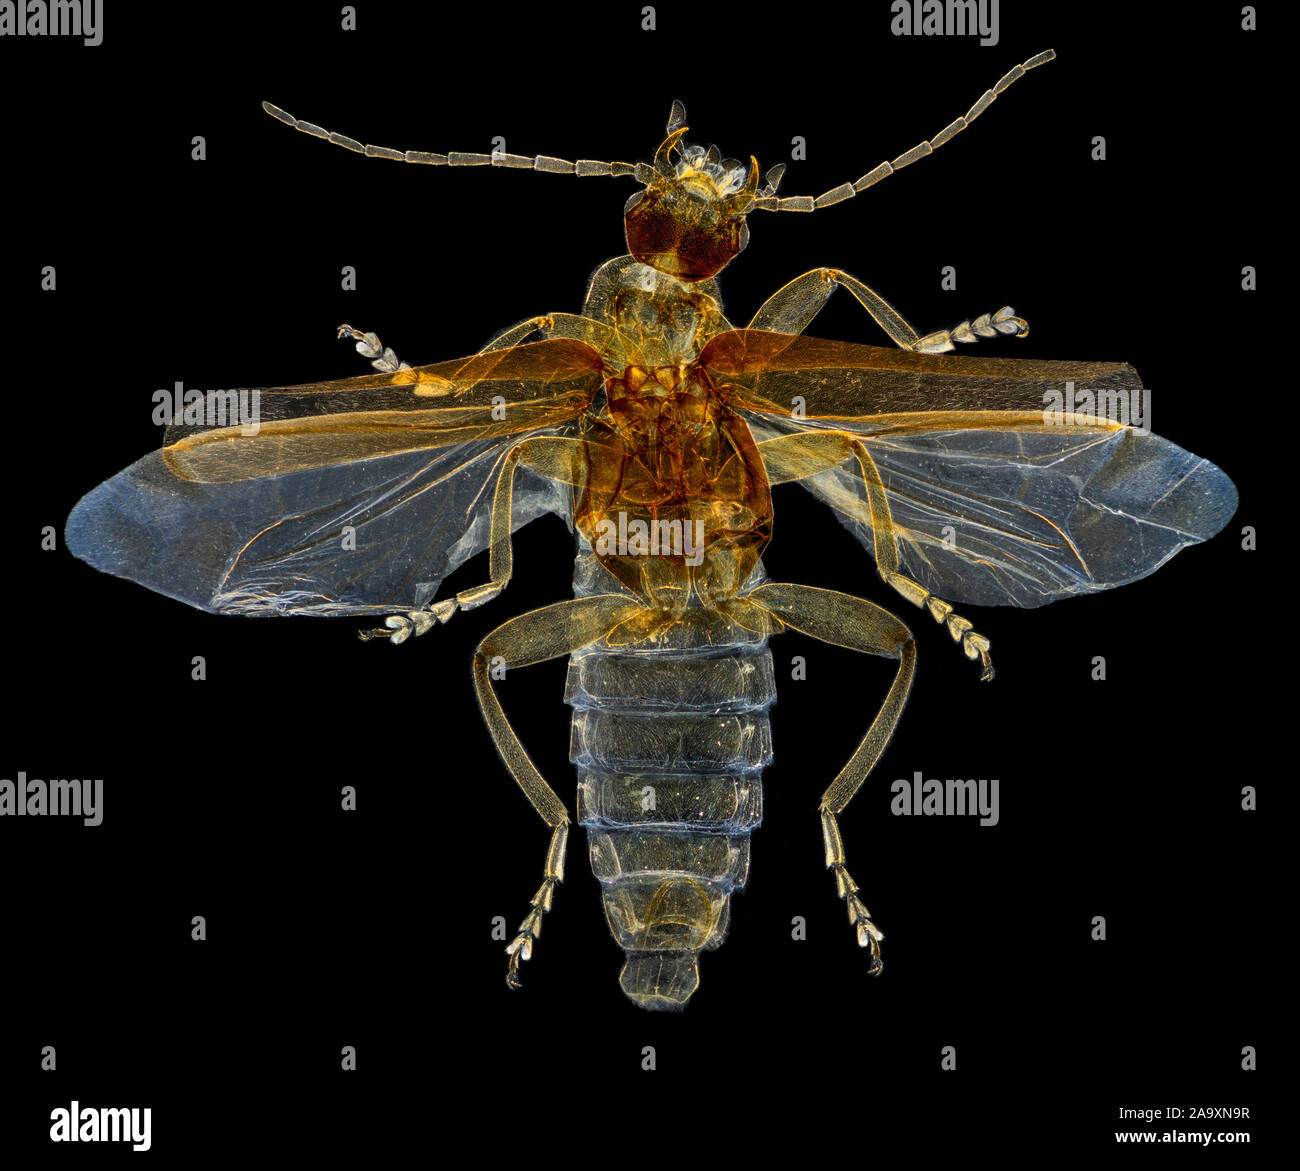 Soldier beetle, Cantharis livida, darkfield photomicrograph Stock Photo